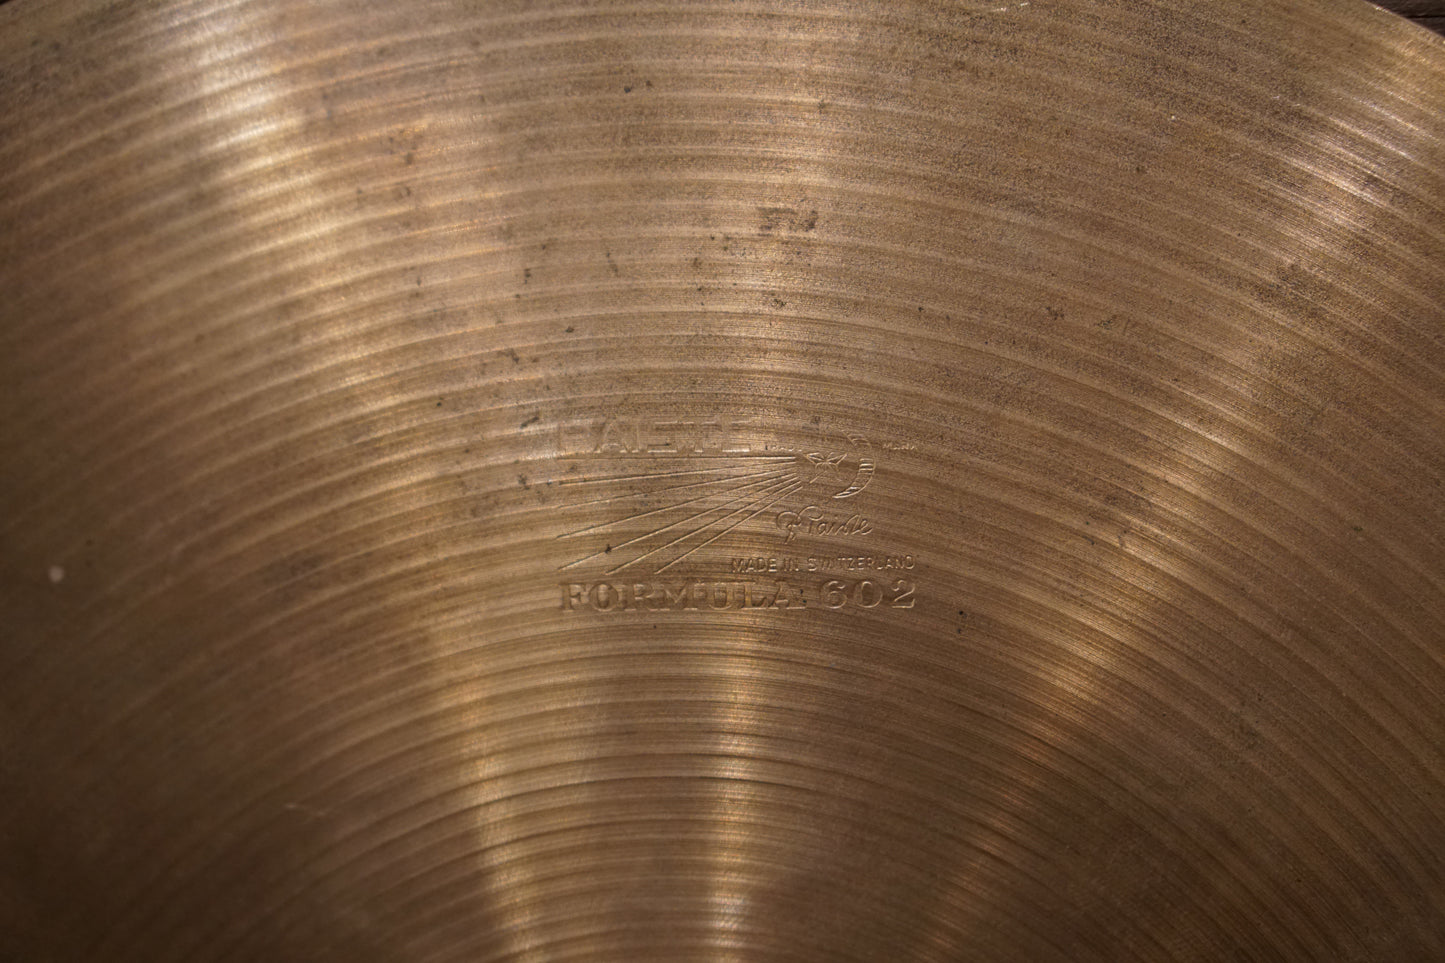 Paiste 14" Formula 602 1960s Hi-Hat Cymbals - 790/922g